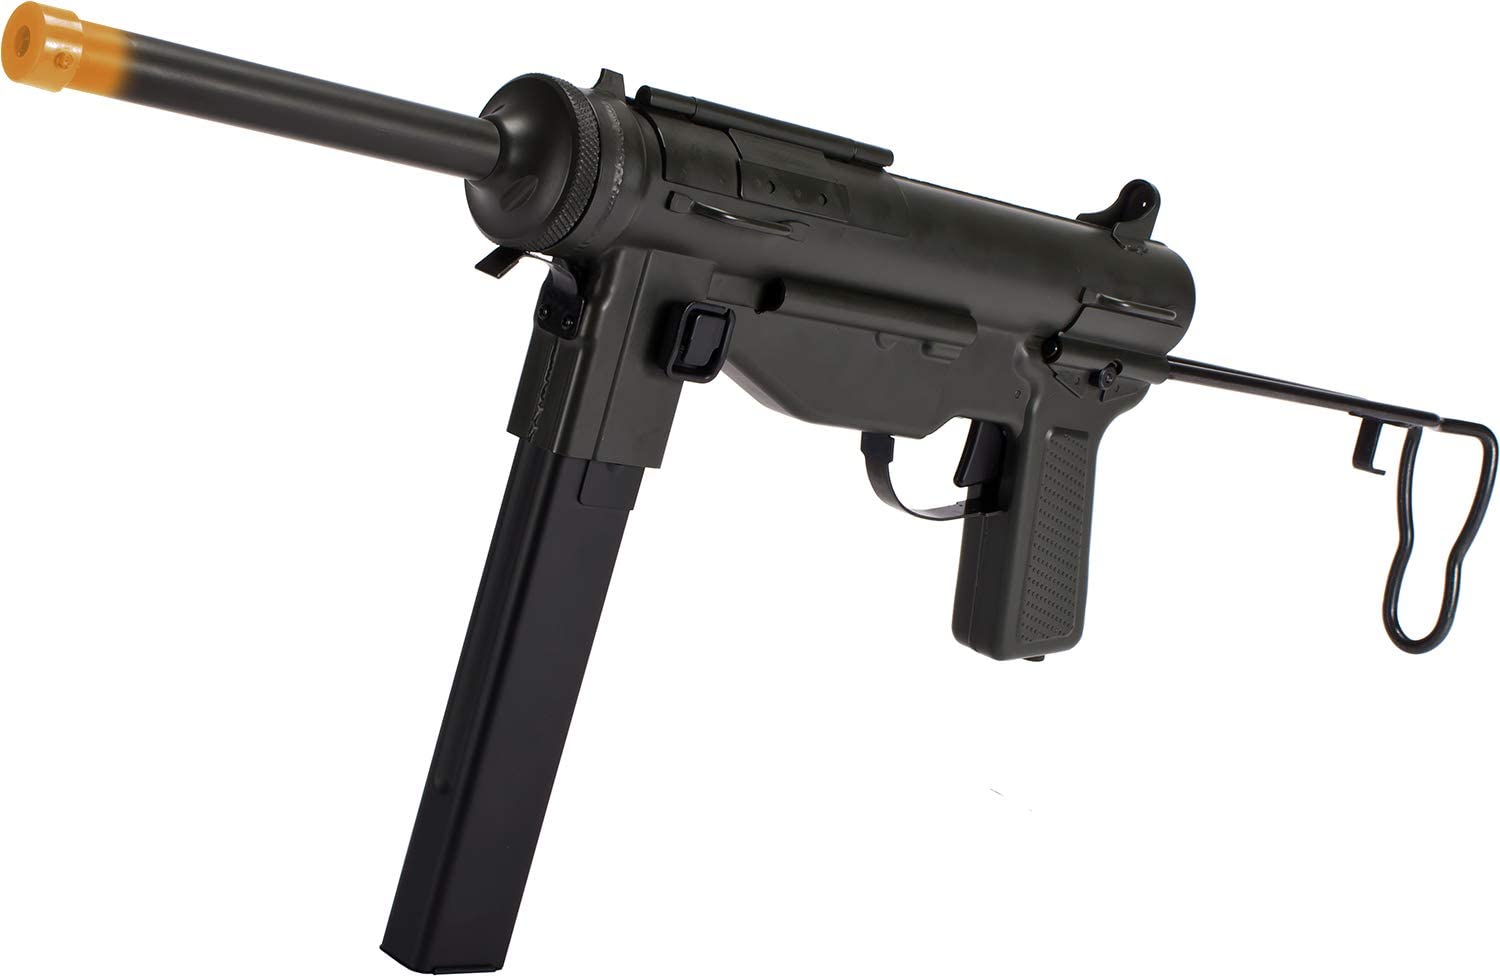 M3 Grease Gun vs Mp40